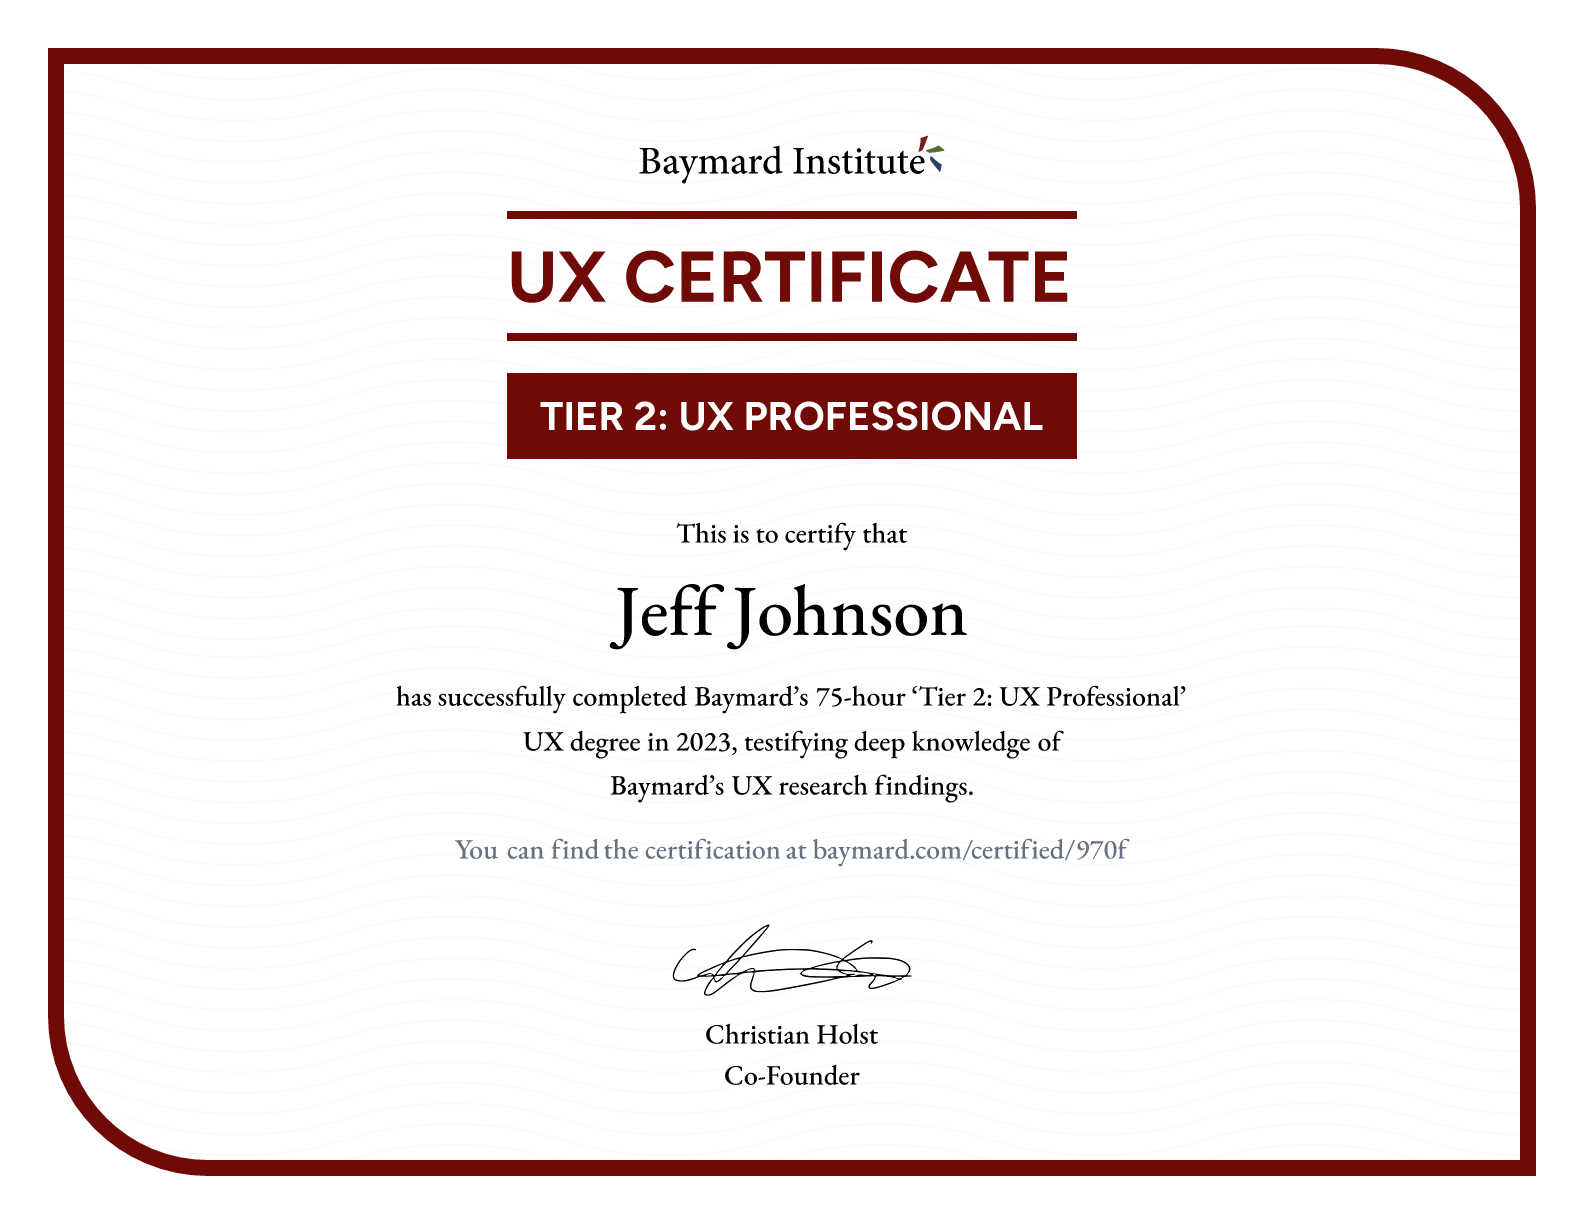 Jeff Johnson’s certificate